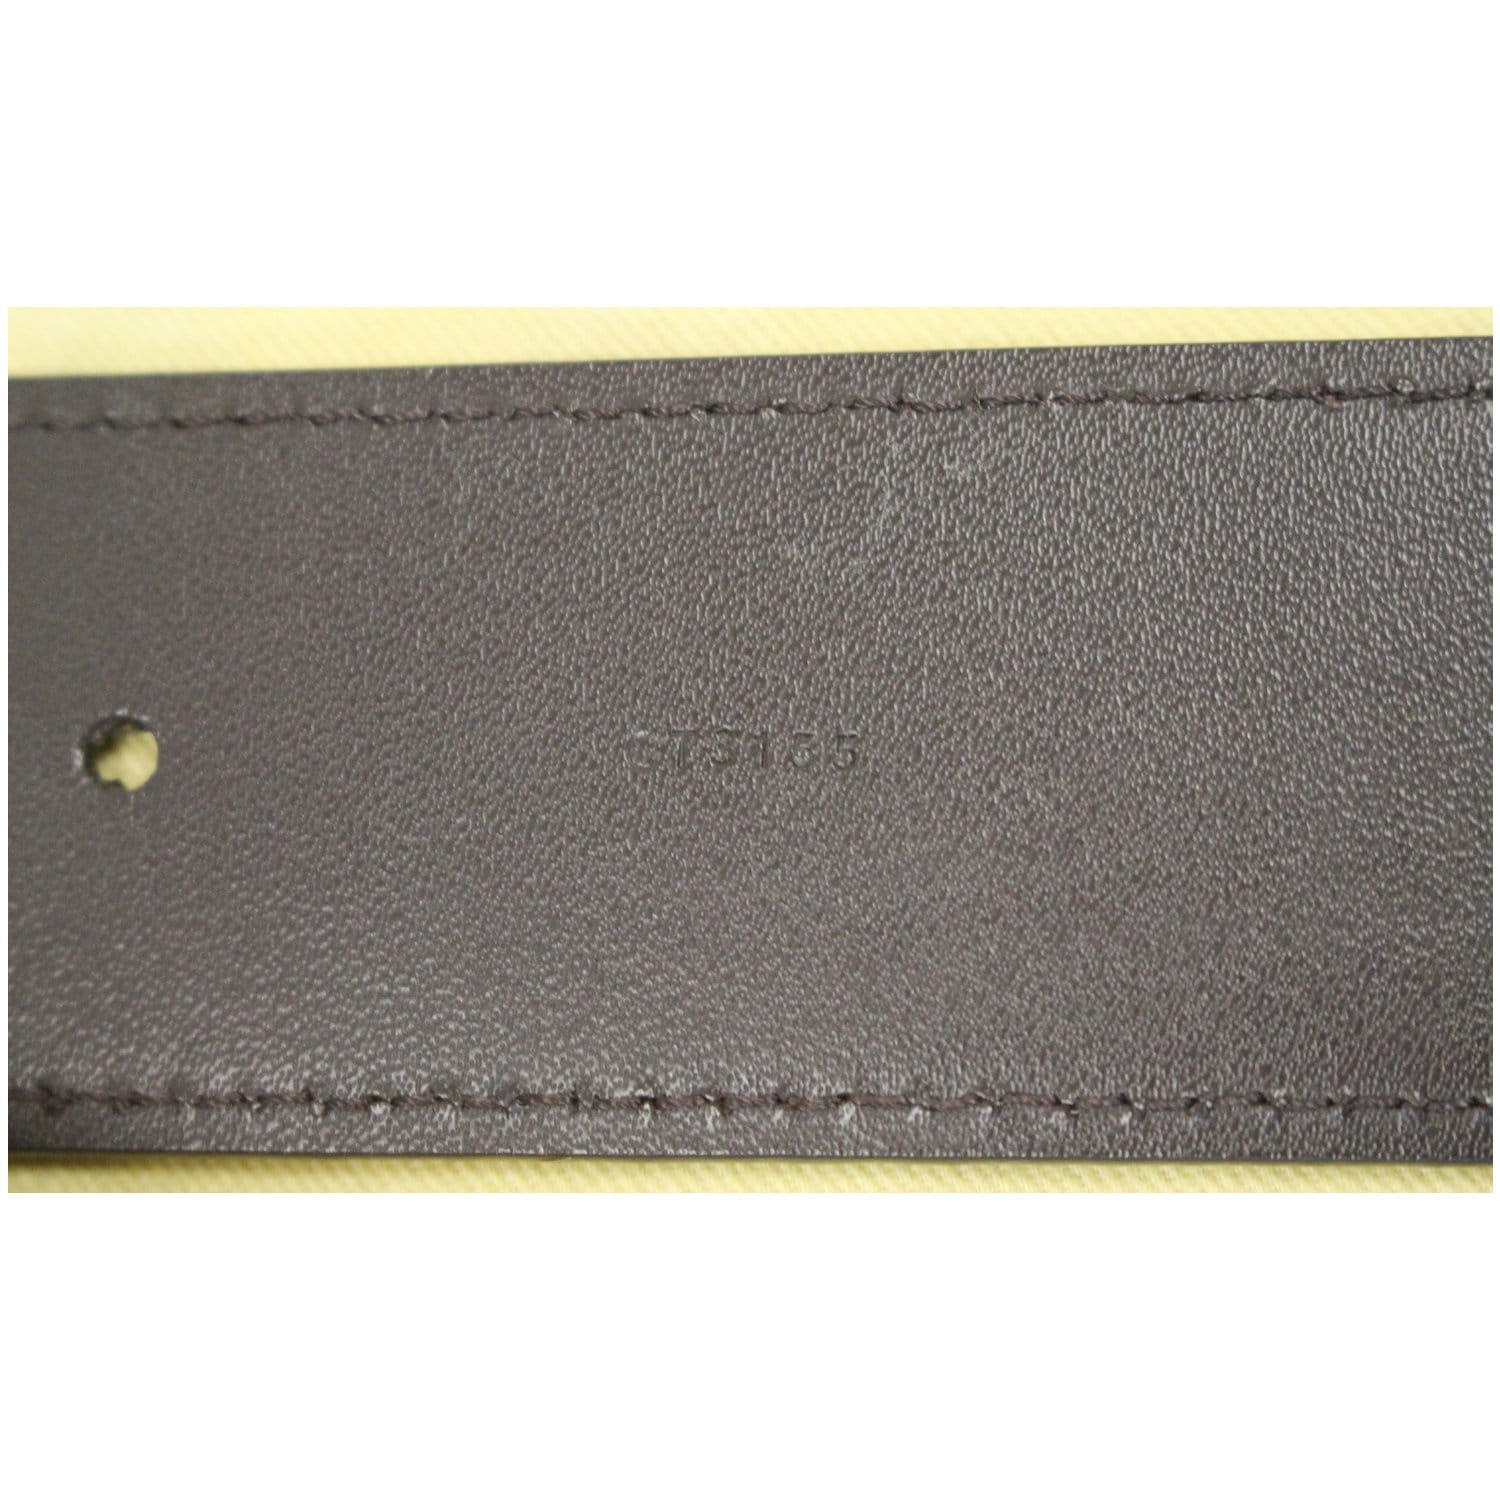 Authentic Louis Vuitton Men's Leather Belt Monogram Used 36 Size